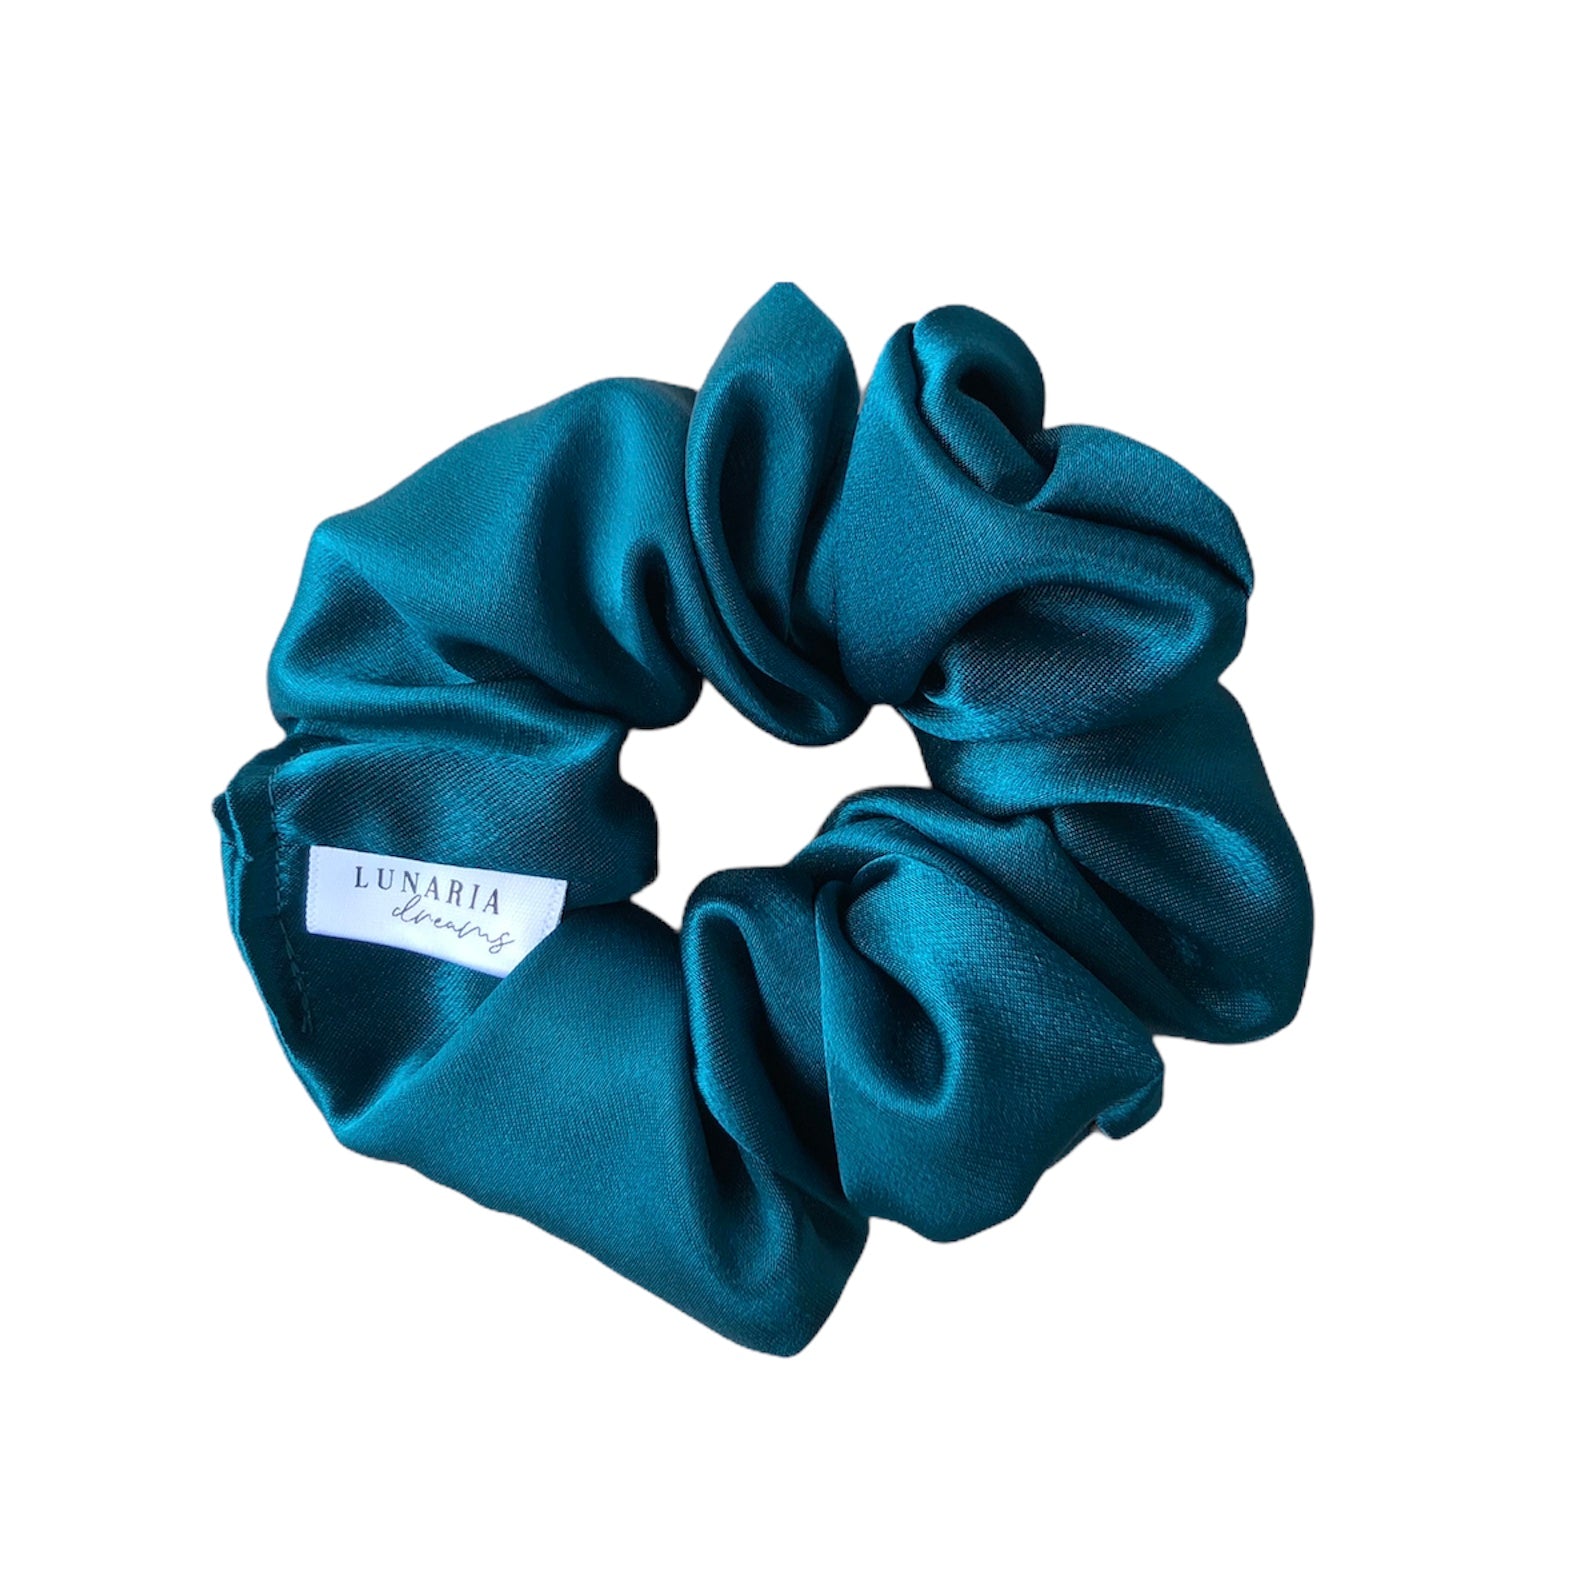 Regular Rika Scrunchie. An average sized teal green blue satin scrunchie. 